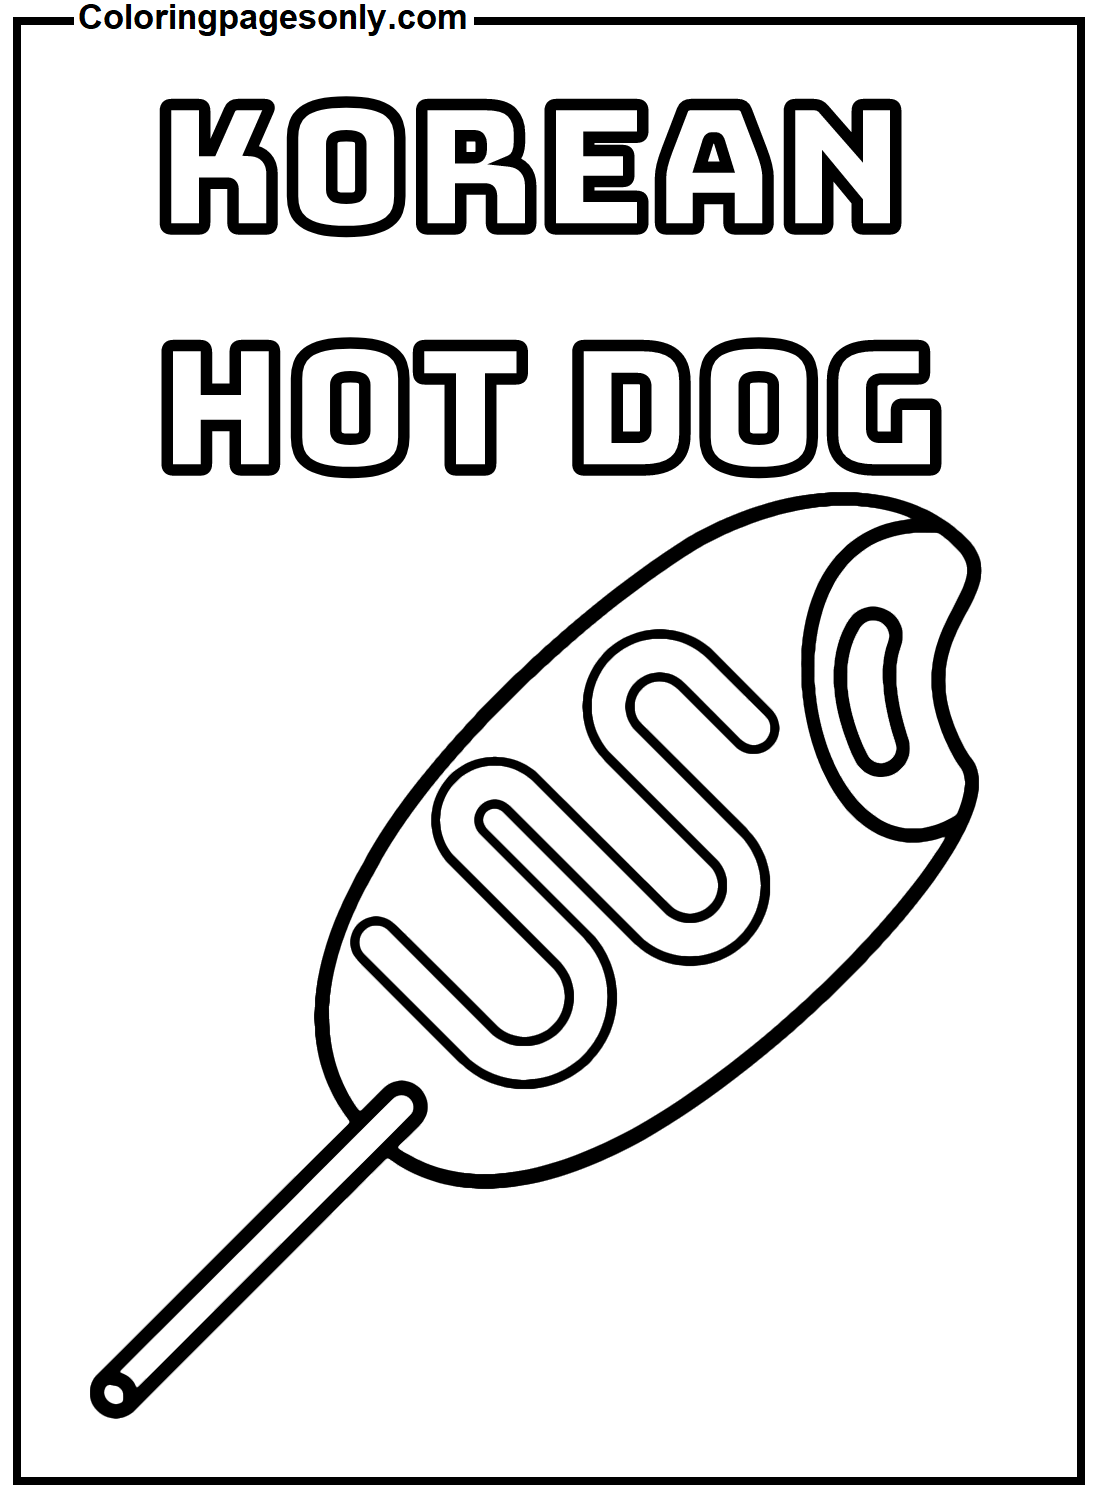 Perro caliente coreano de Hot Dog